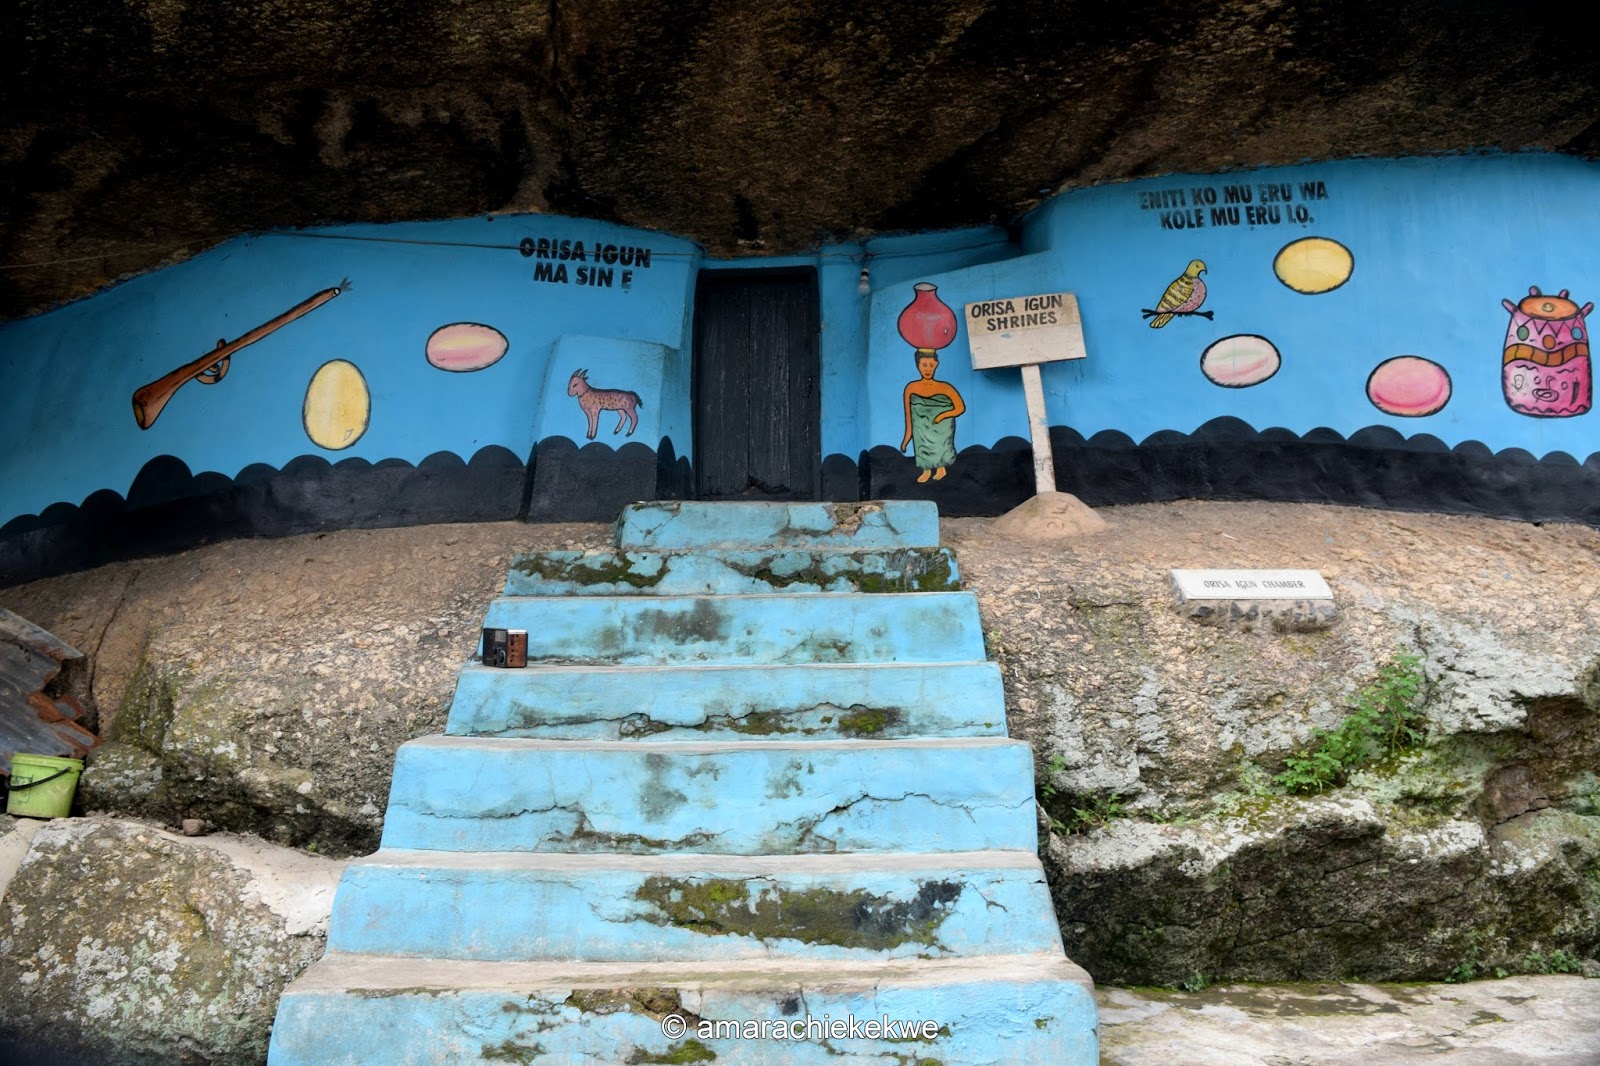 Places to visit in Nigeria - Olumo rock in Abeokuta